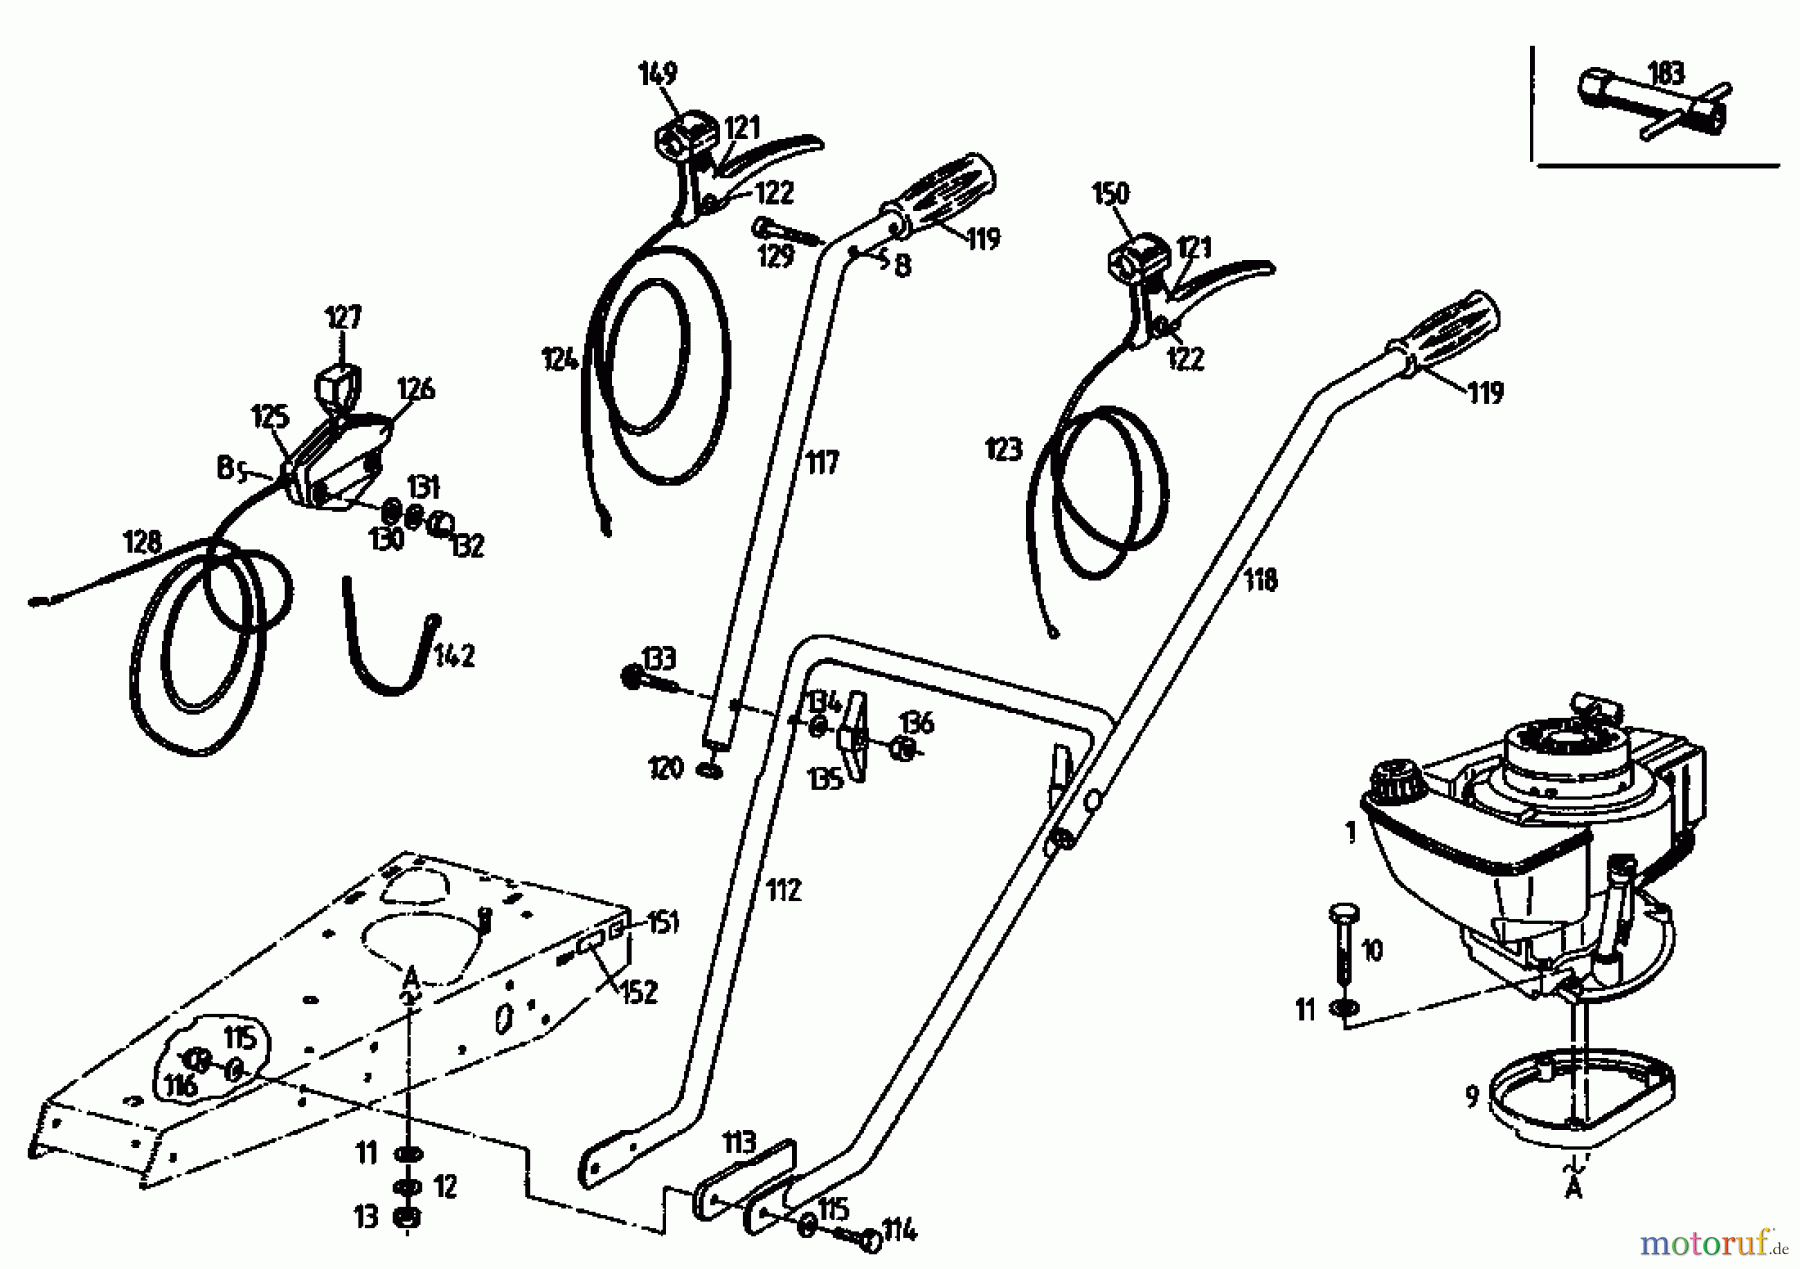  Gutbrod Cutter bar mower BM 700 07510.04  (1994) Handle